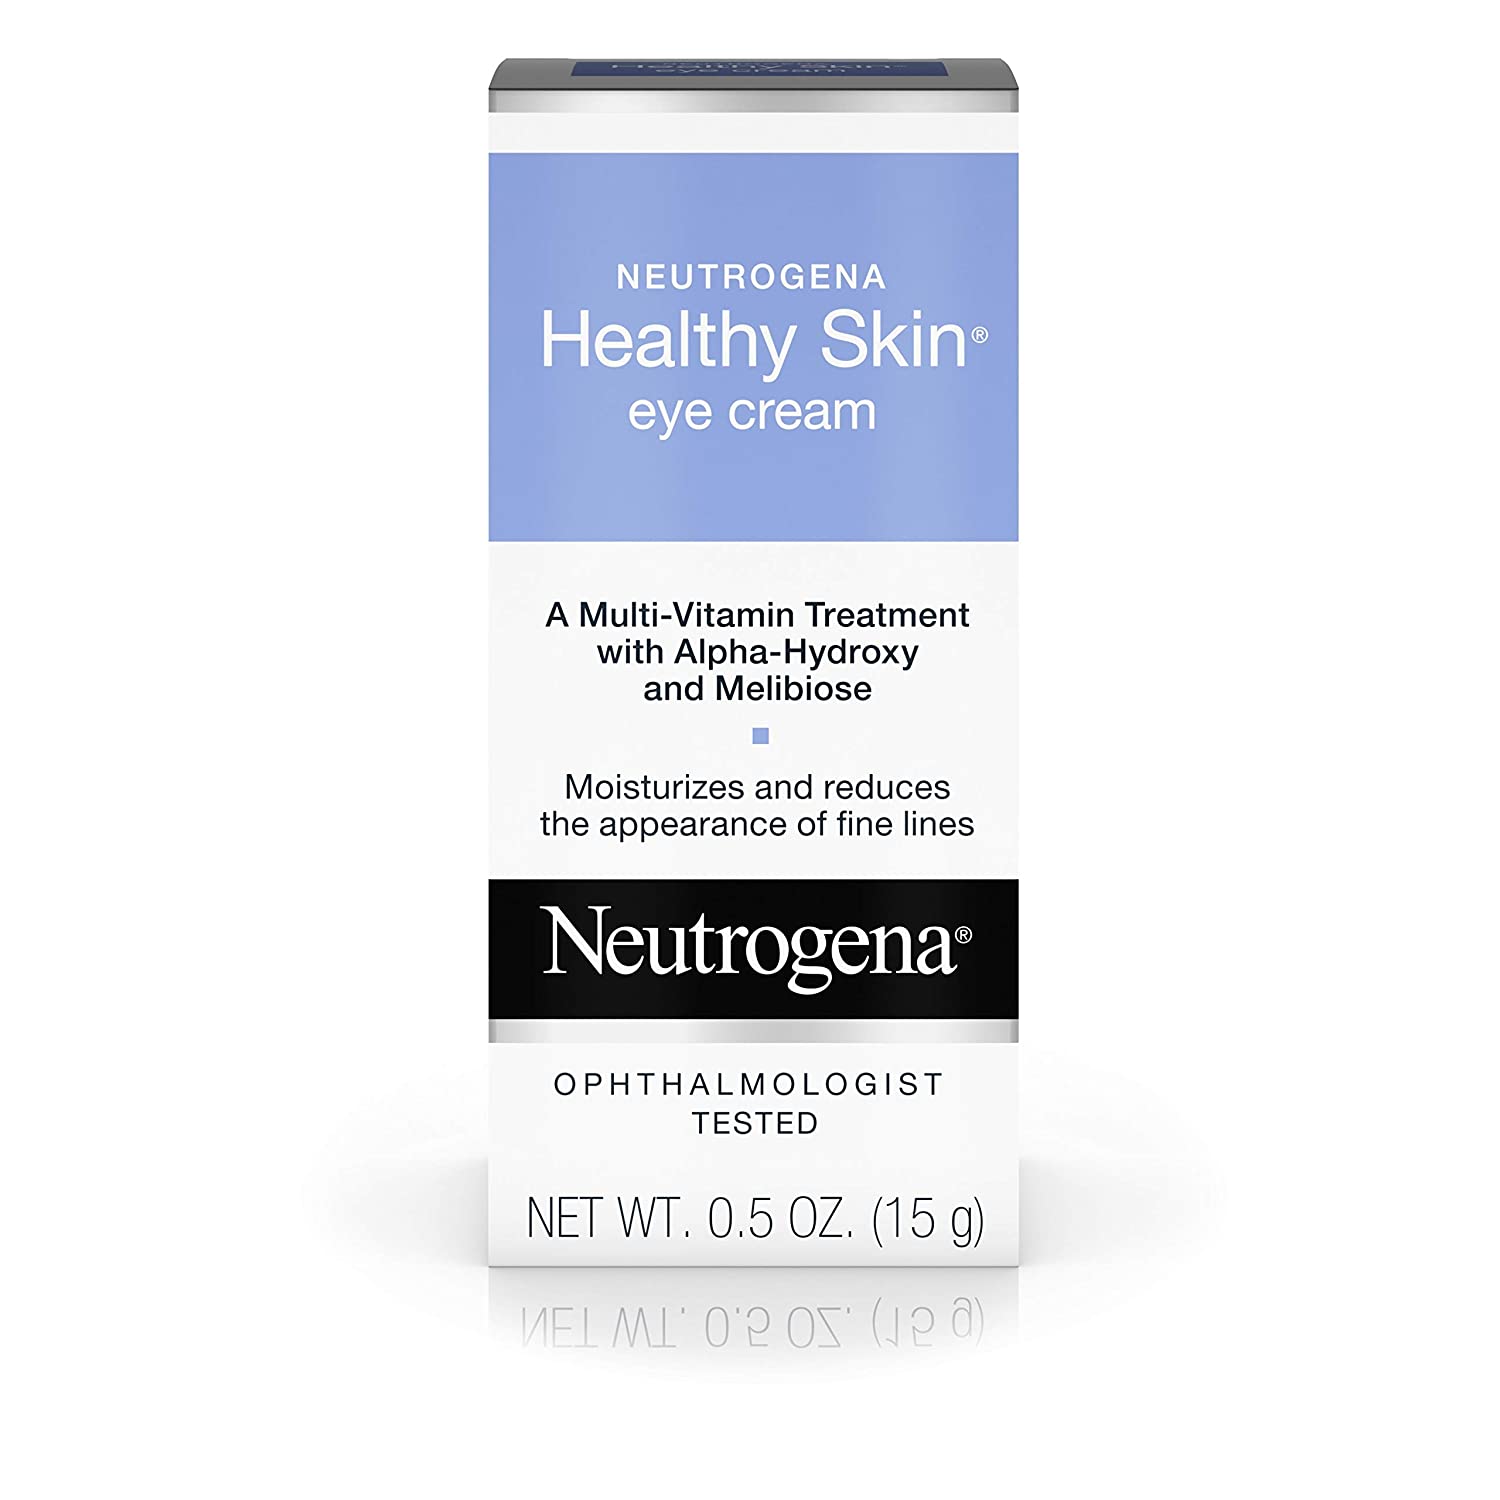 Neutrogena Healthy Skin Eye Firming Cream with Alpha-Hydroxy Acid, Vitamin A & Vitamin B5, Hypoallergenic Eye Cream to Reduce Fine Lines & Wrinkles, Fragrance-Free - 0.5 Oz (15g)